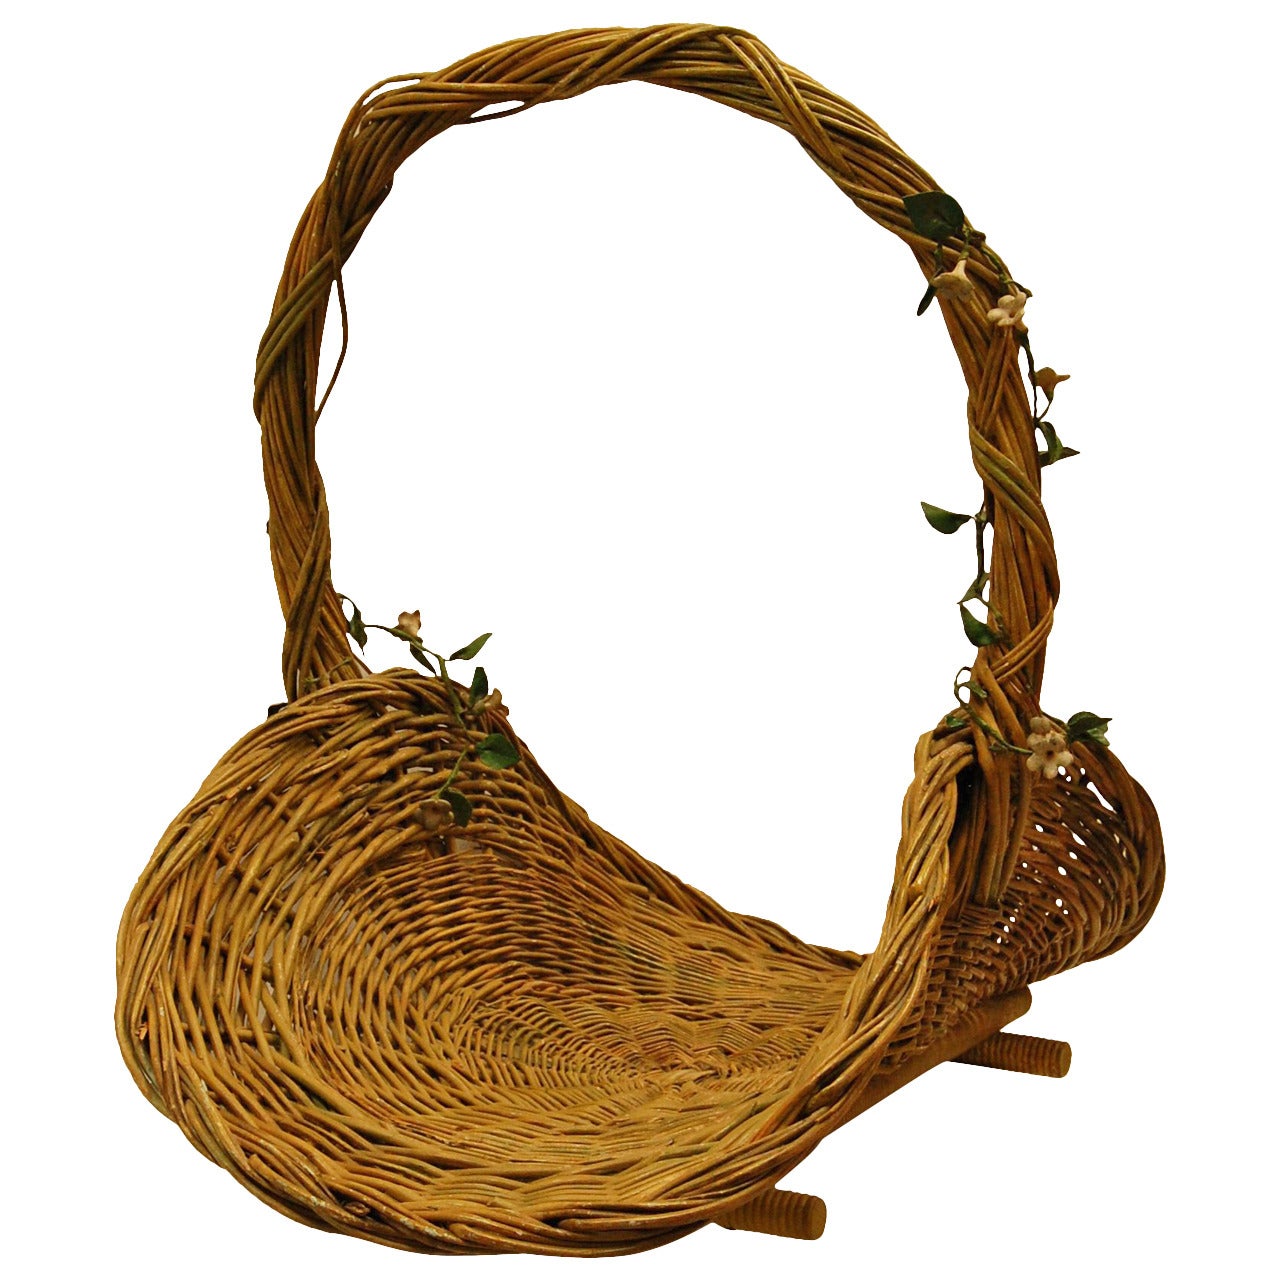 Victorian Rattan Basket with Flowering Vines